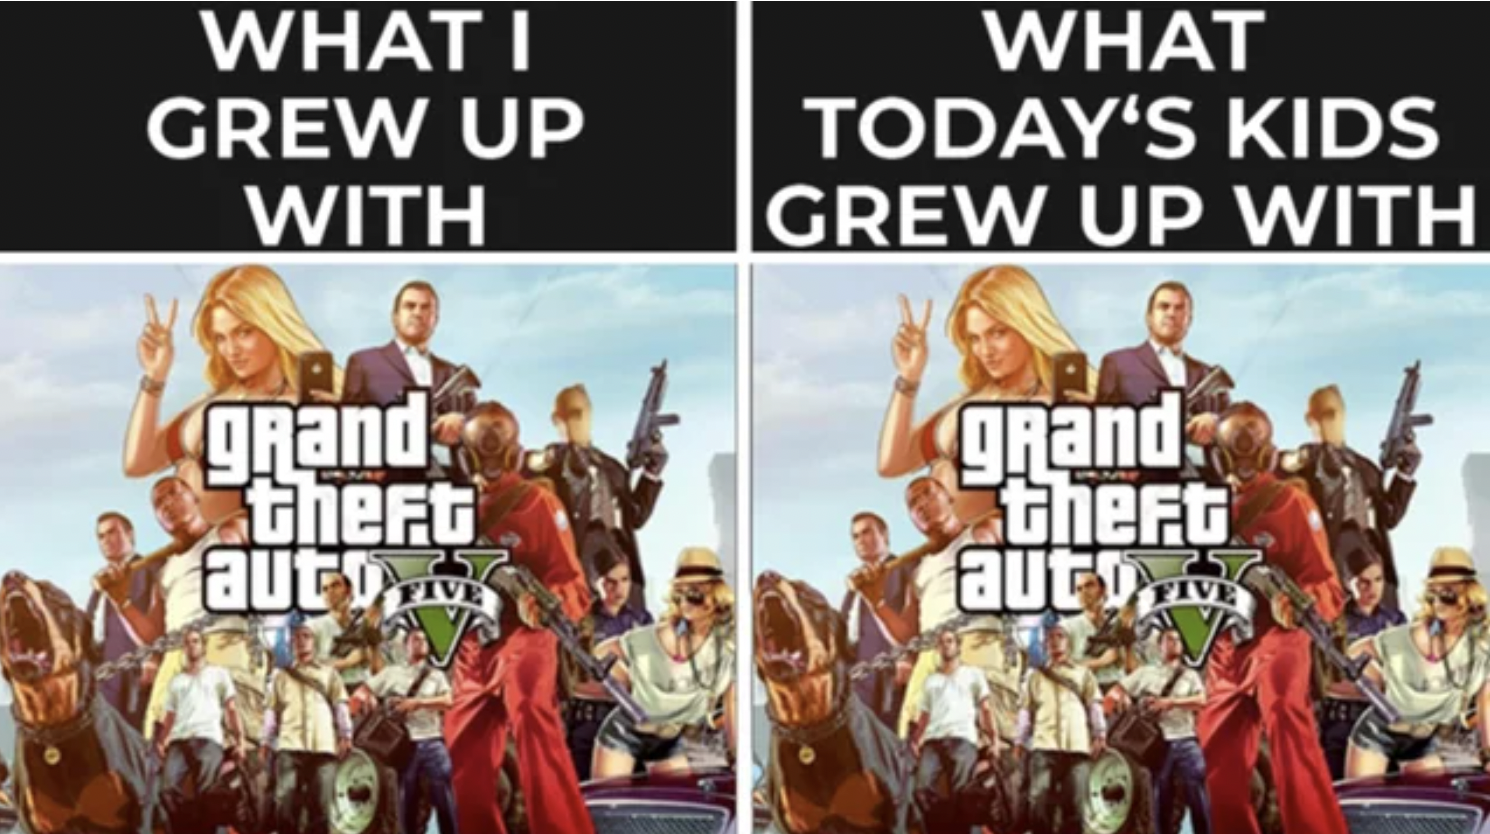 GTA V Memes - gta 4 - What I Grew Up With grand theft aut What Today'S Kids Grew Up With grand theft auto